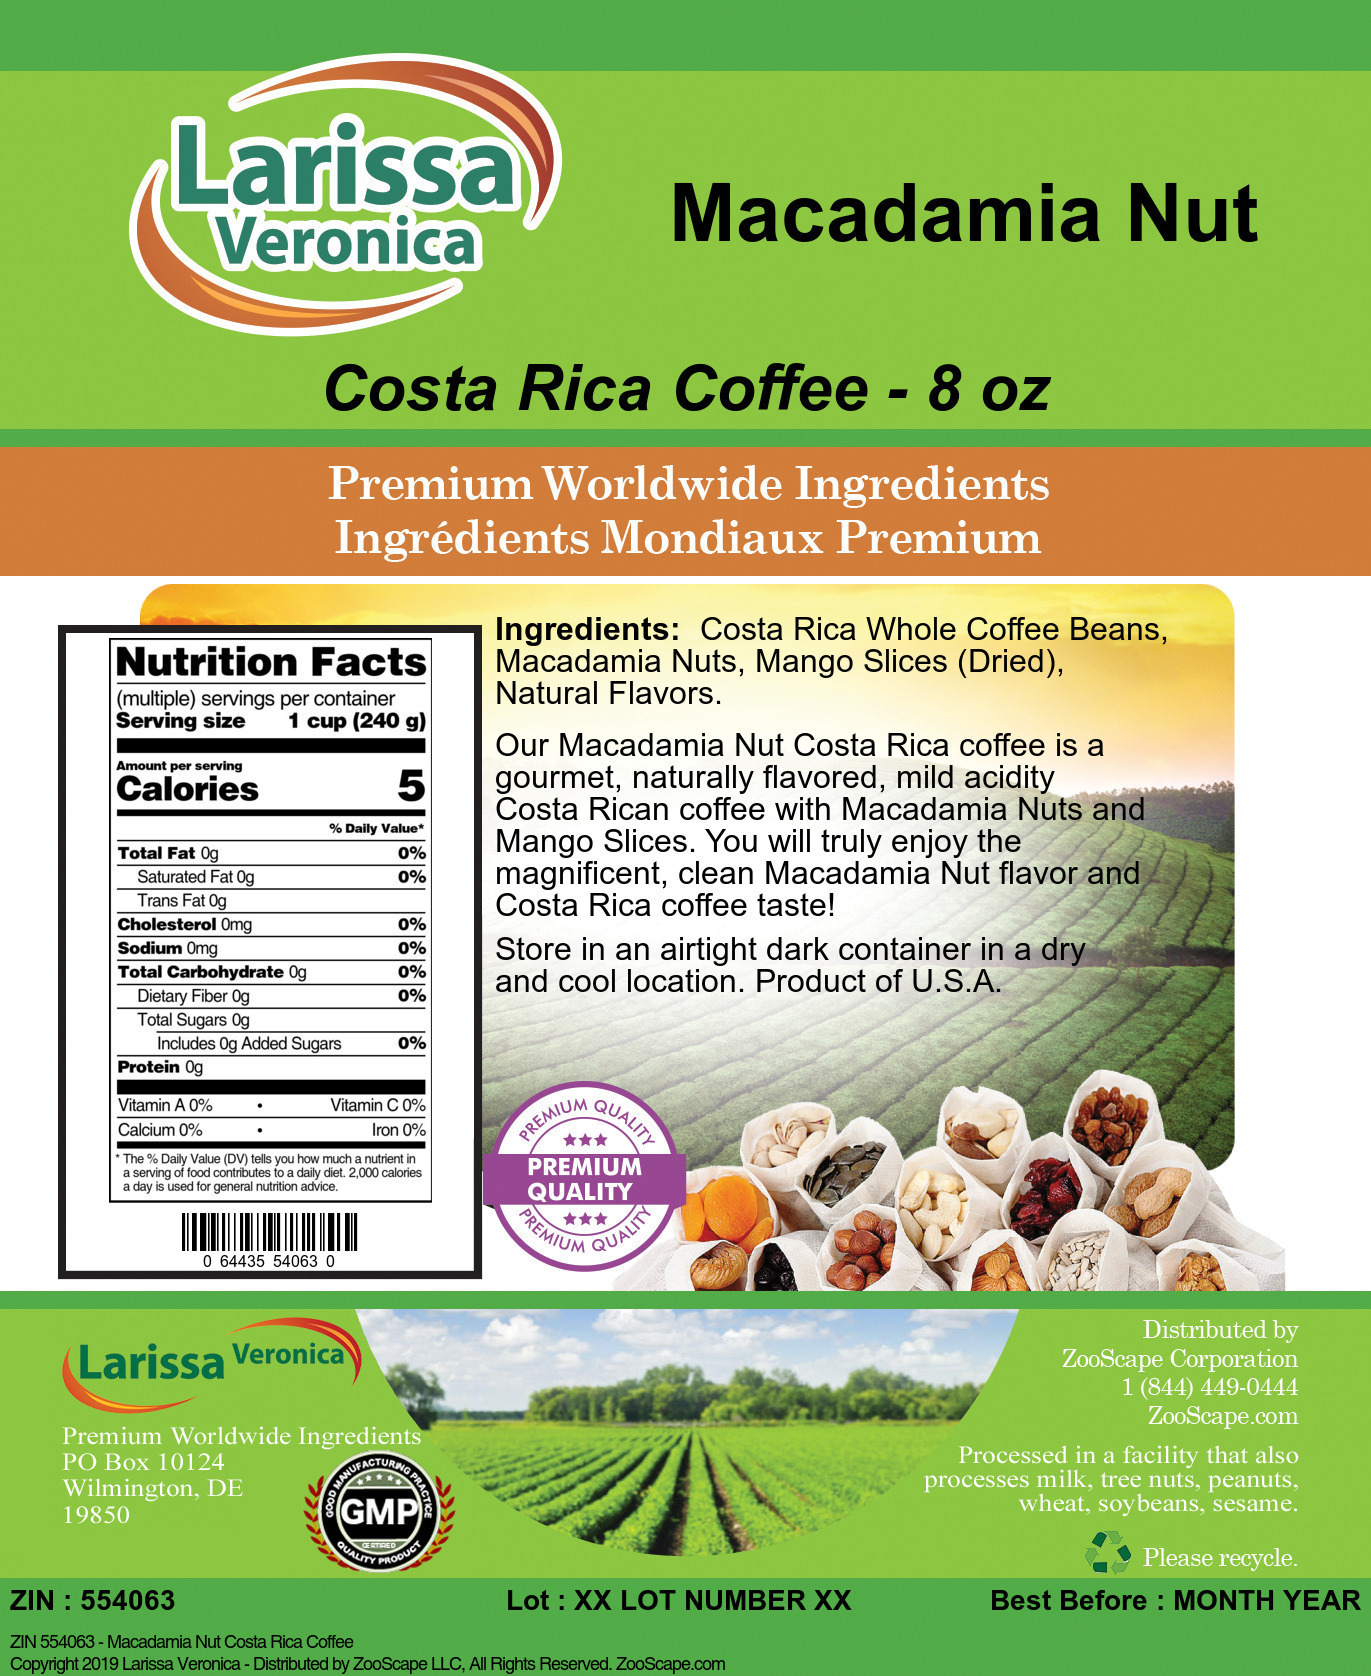 Macadamia Nut Costa Rica Coffee - Label